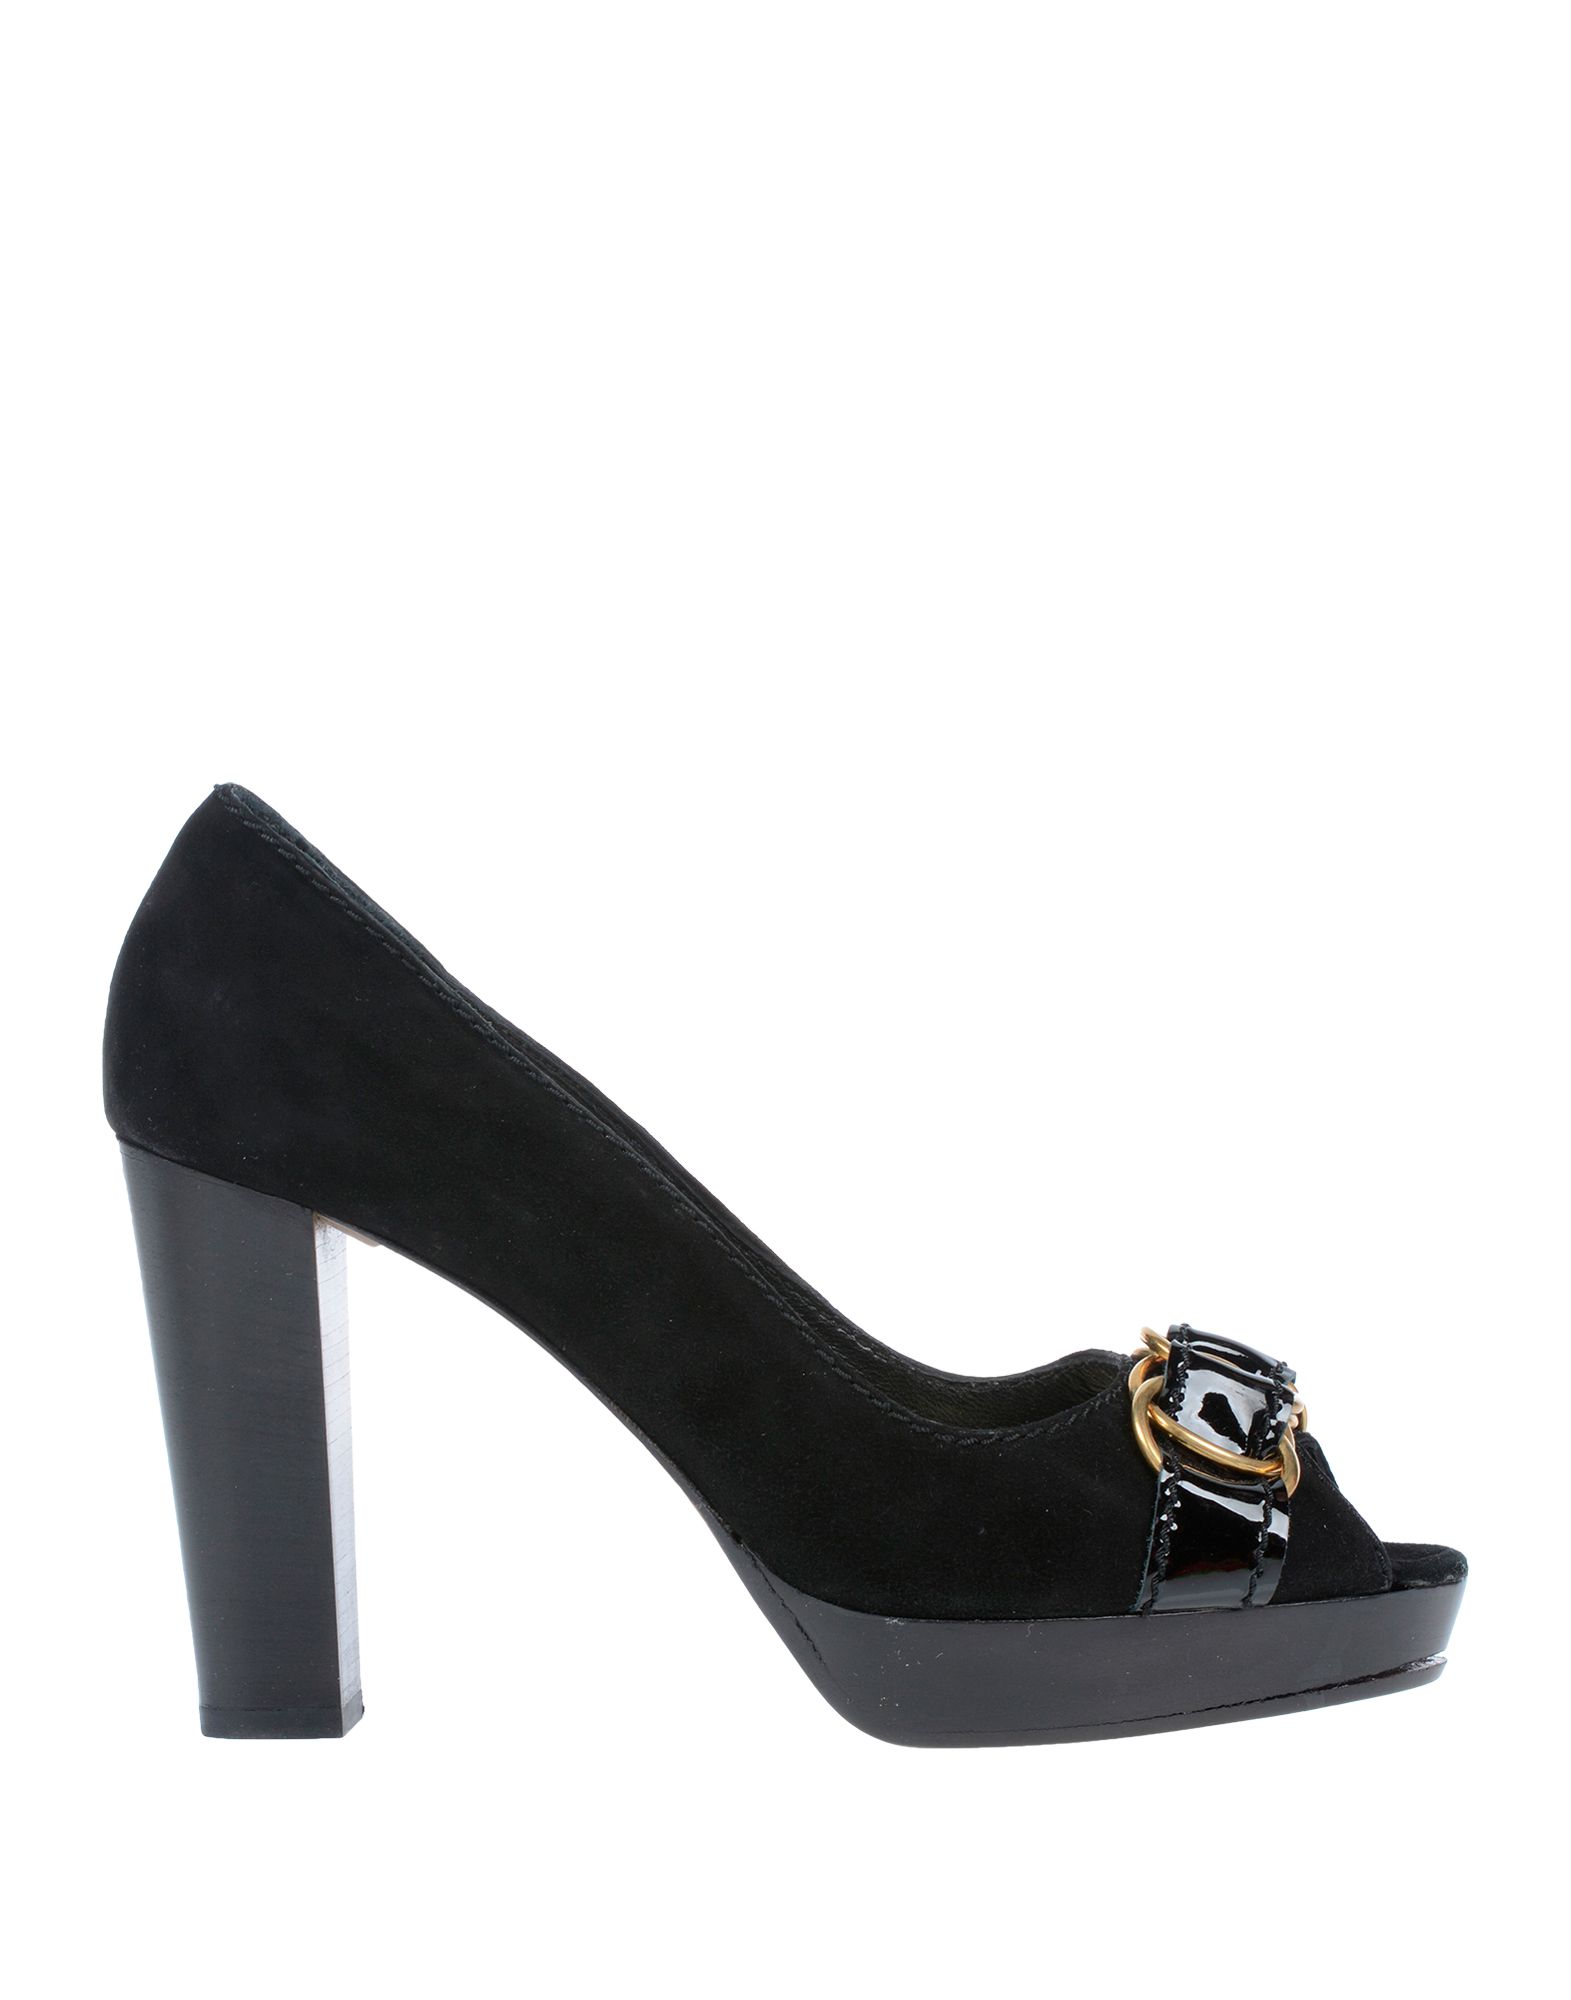 juicy couture black heels